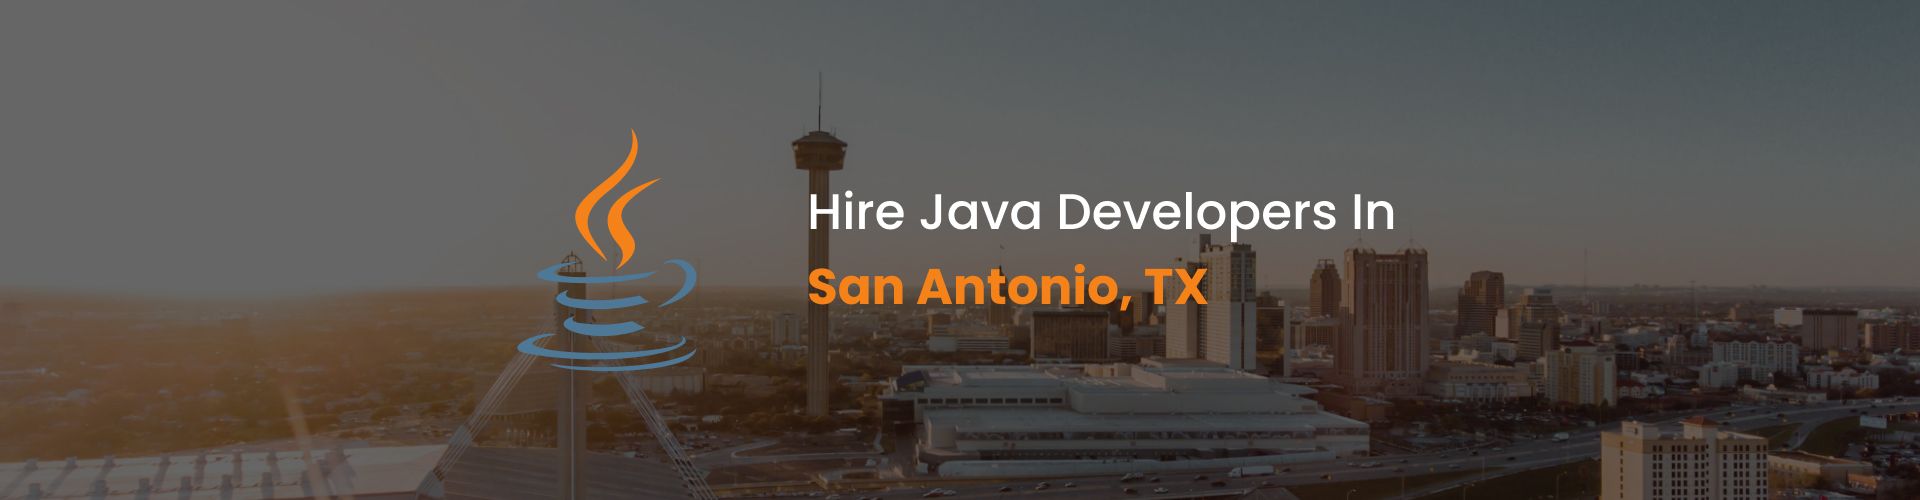 hire java developers in san antonio